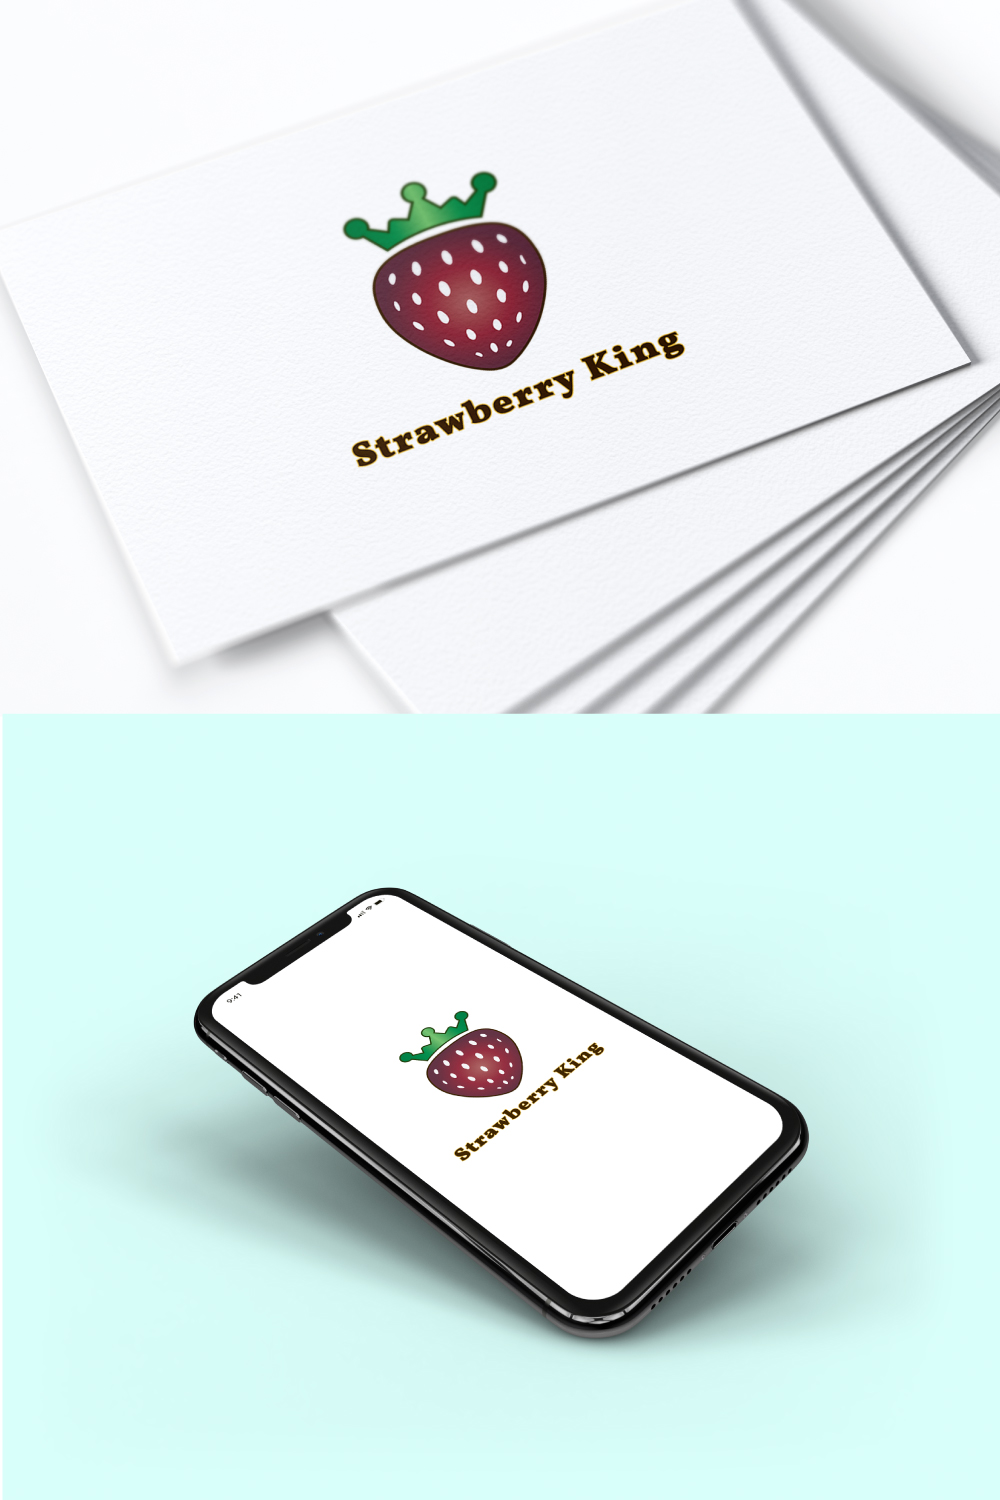 Strawberry King Logo Design Templete vector illustration pinterest preview image.